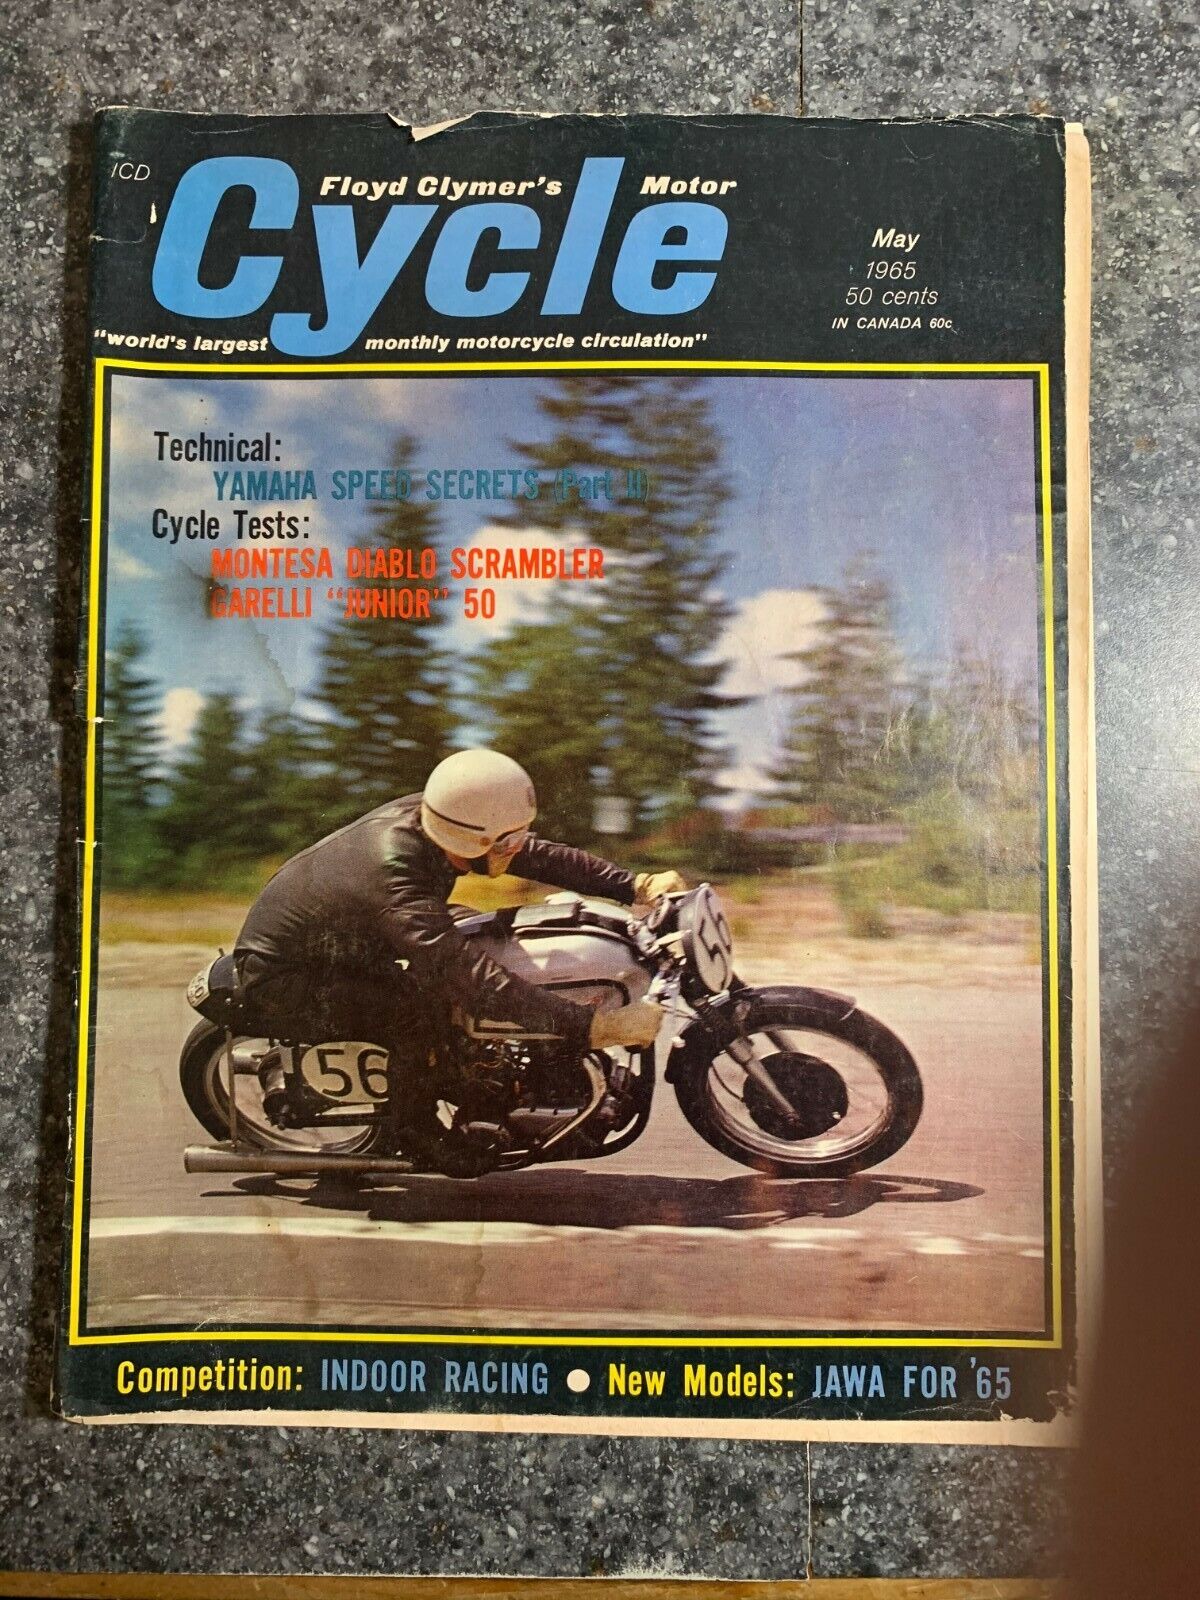 Floyd Glymer's Motor Cycle Magazine (may 1965)